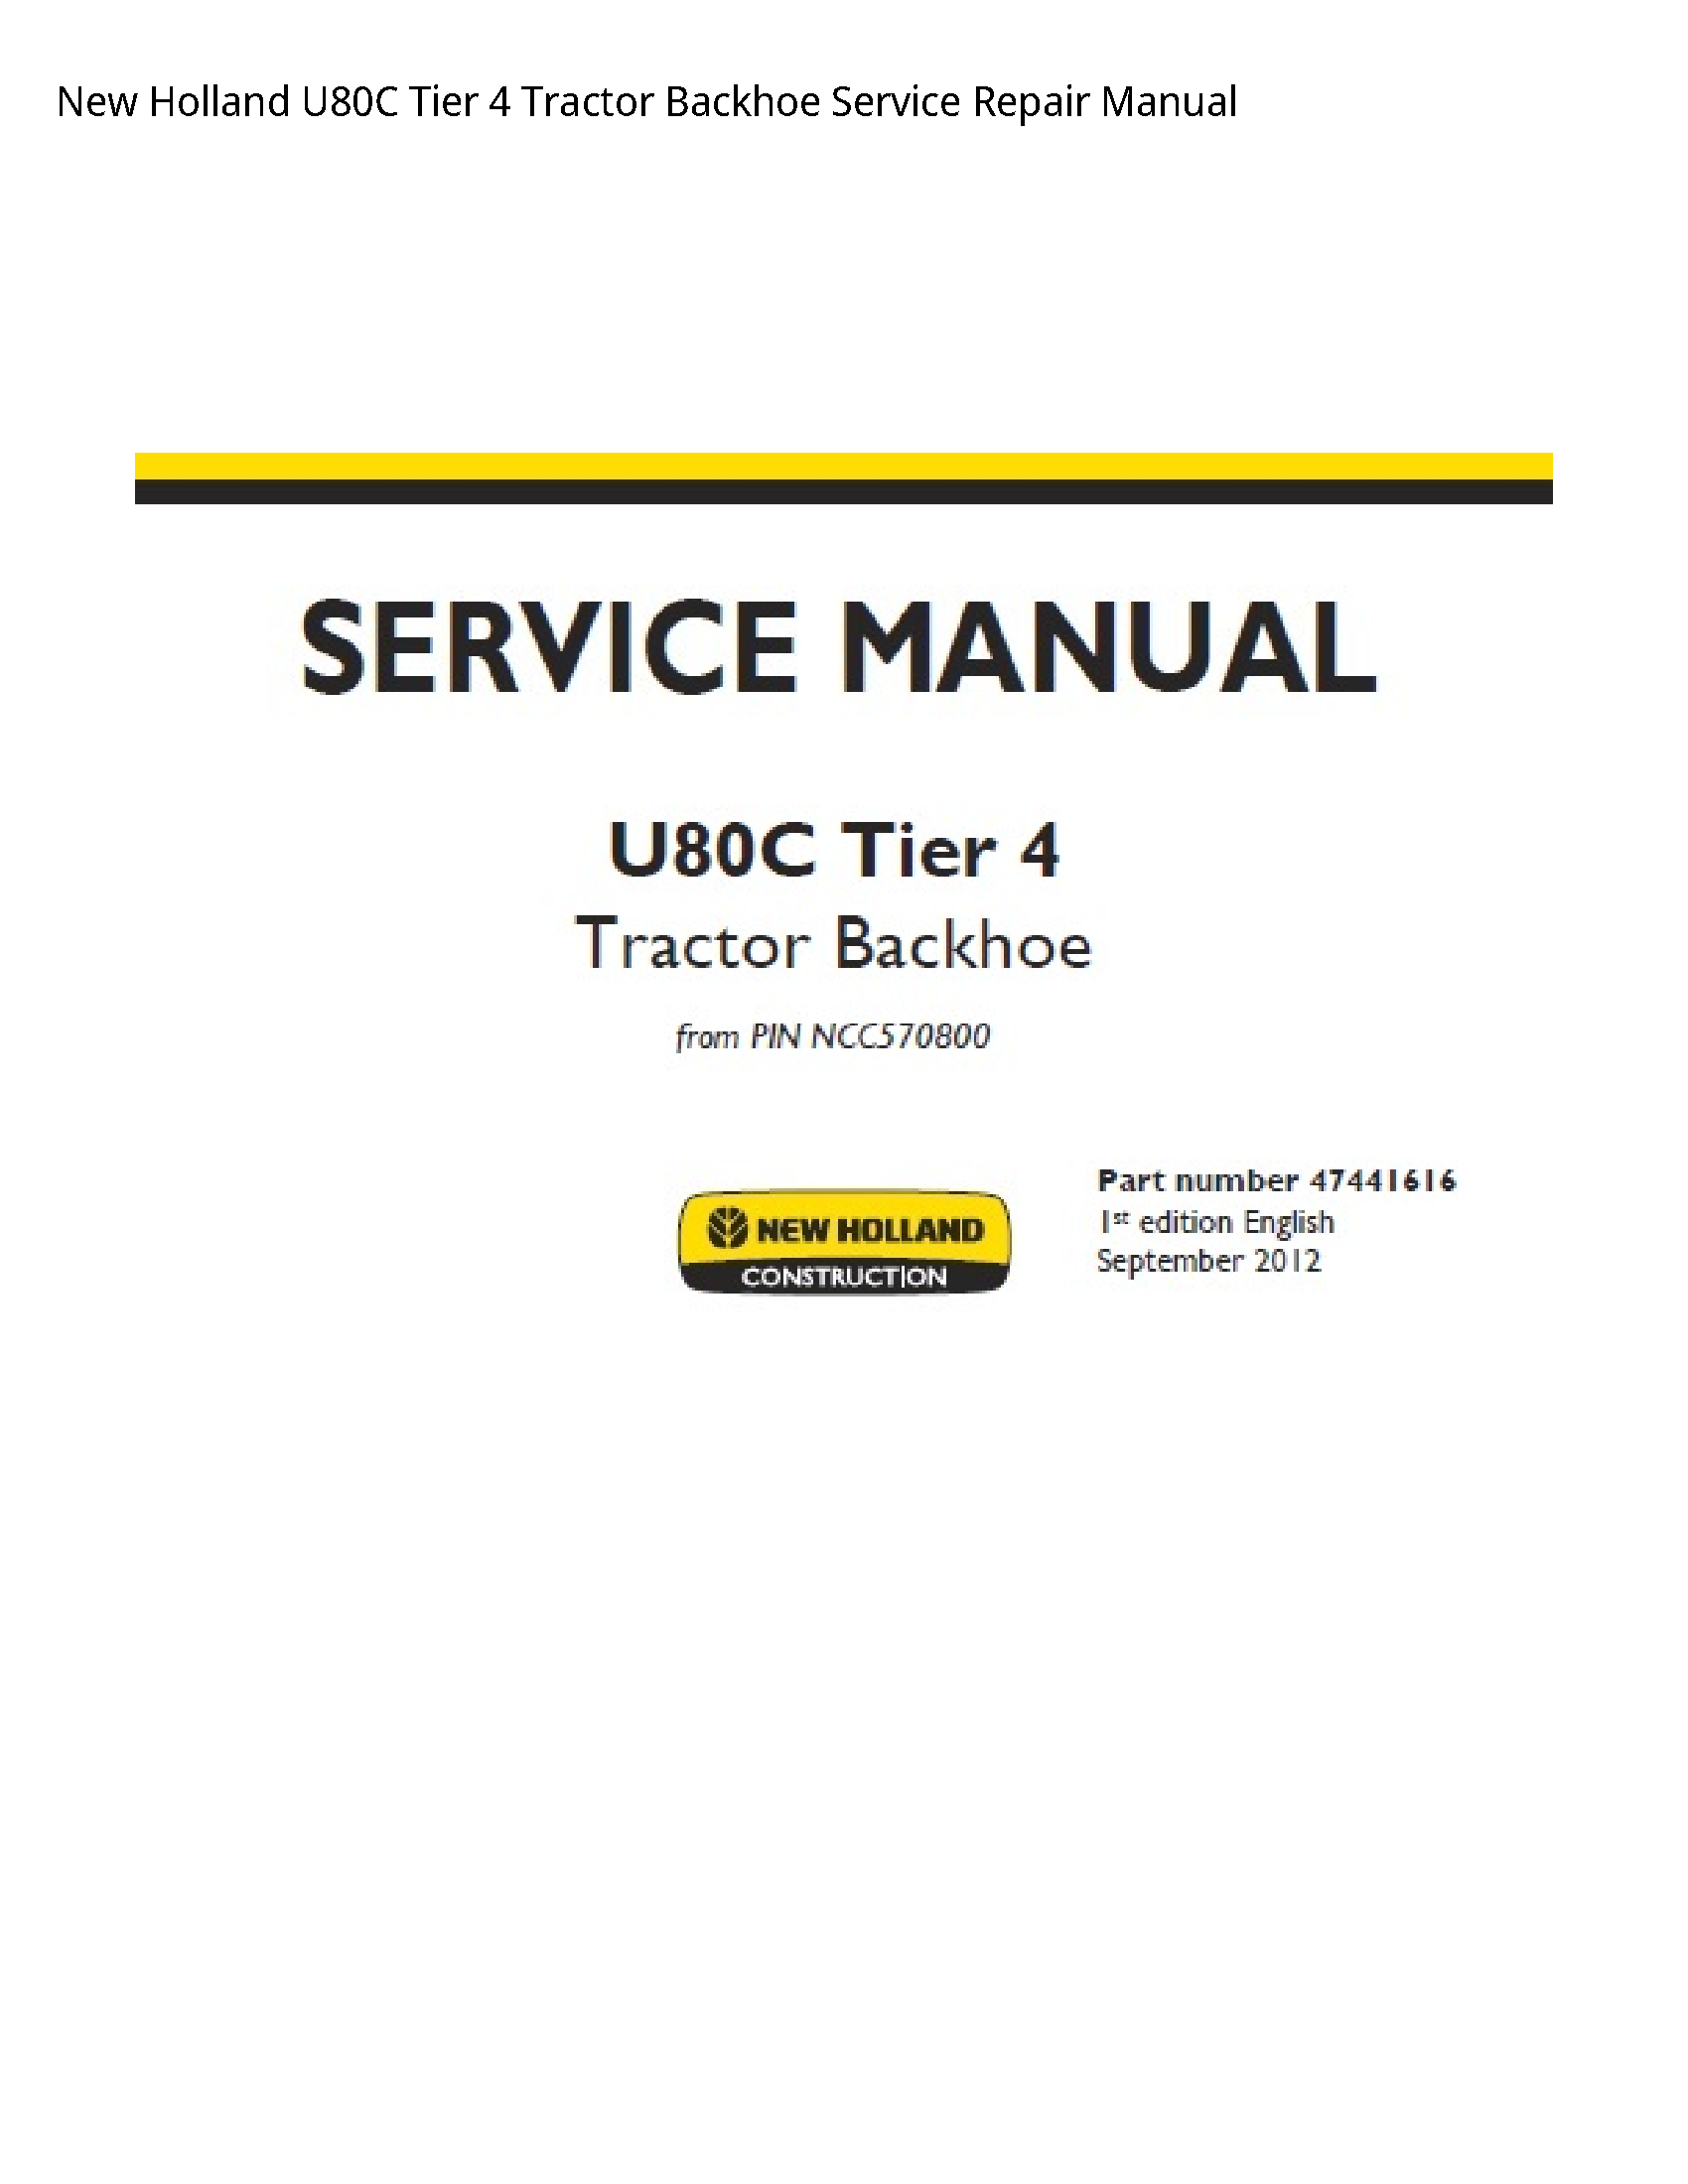 New Holland U80C Tier Tractor Backhoe manual